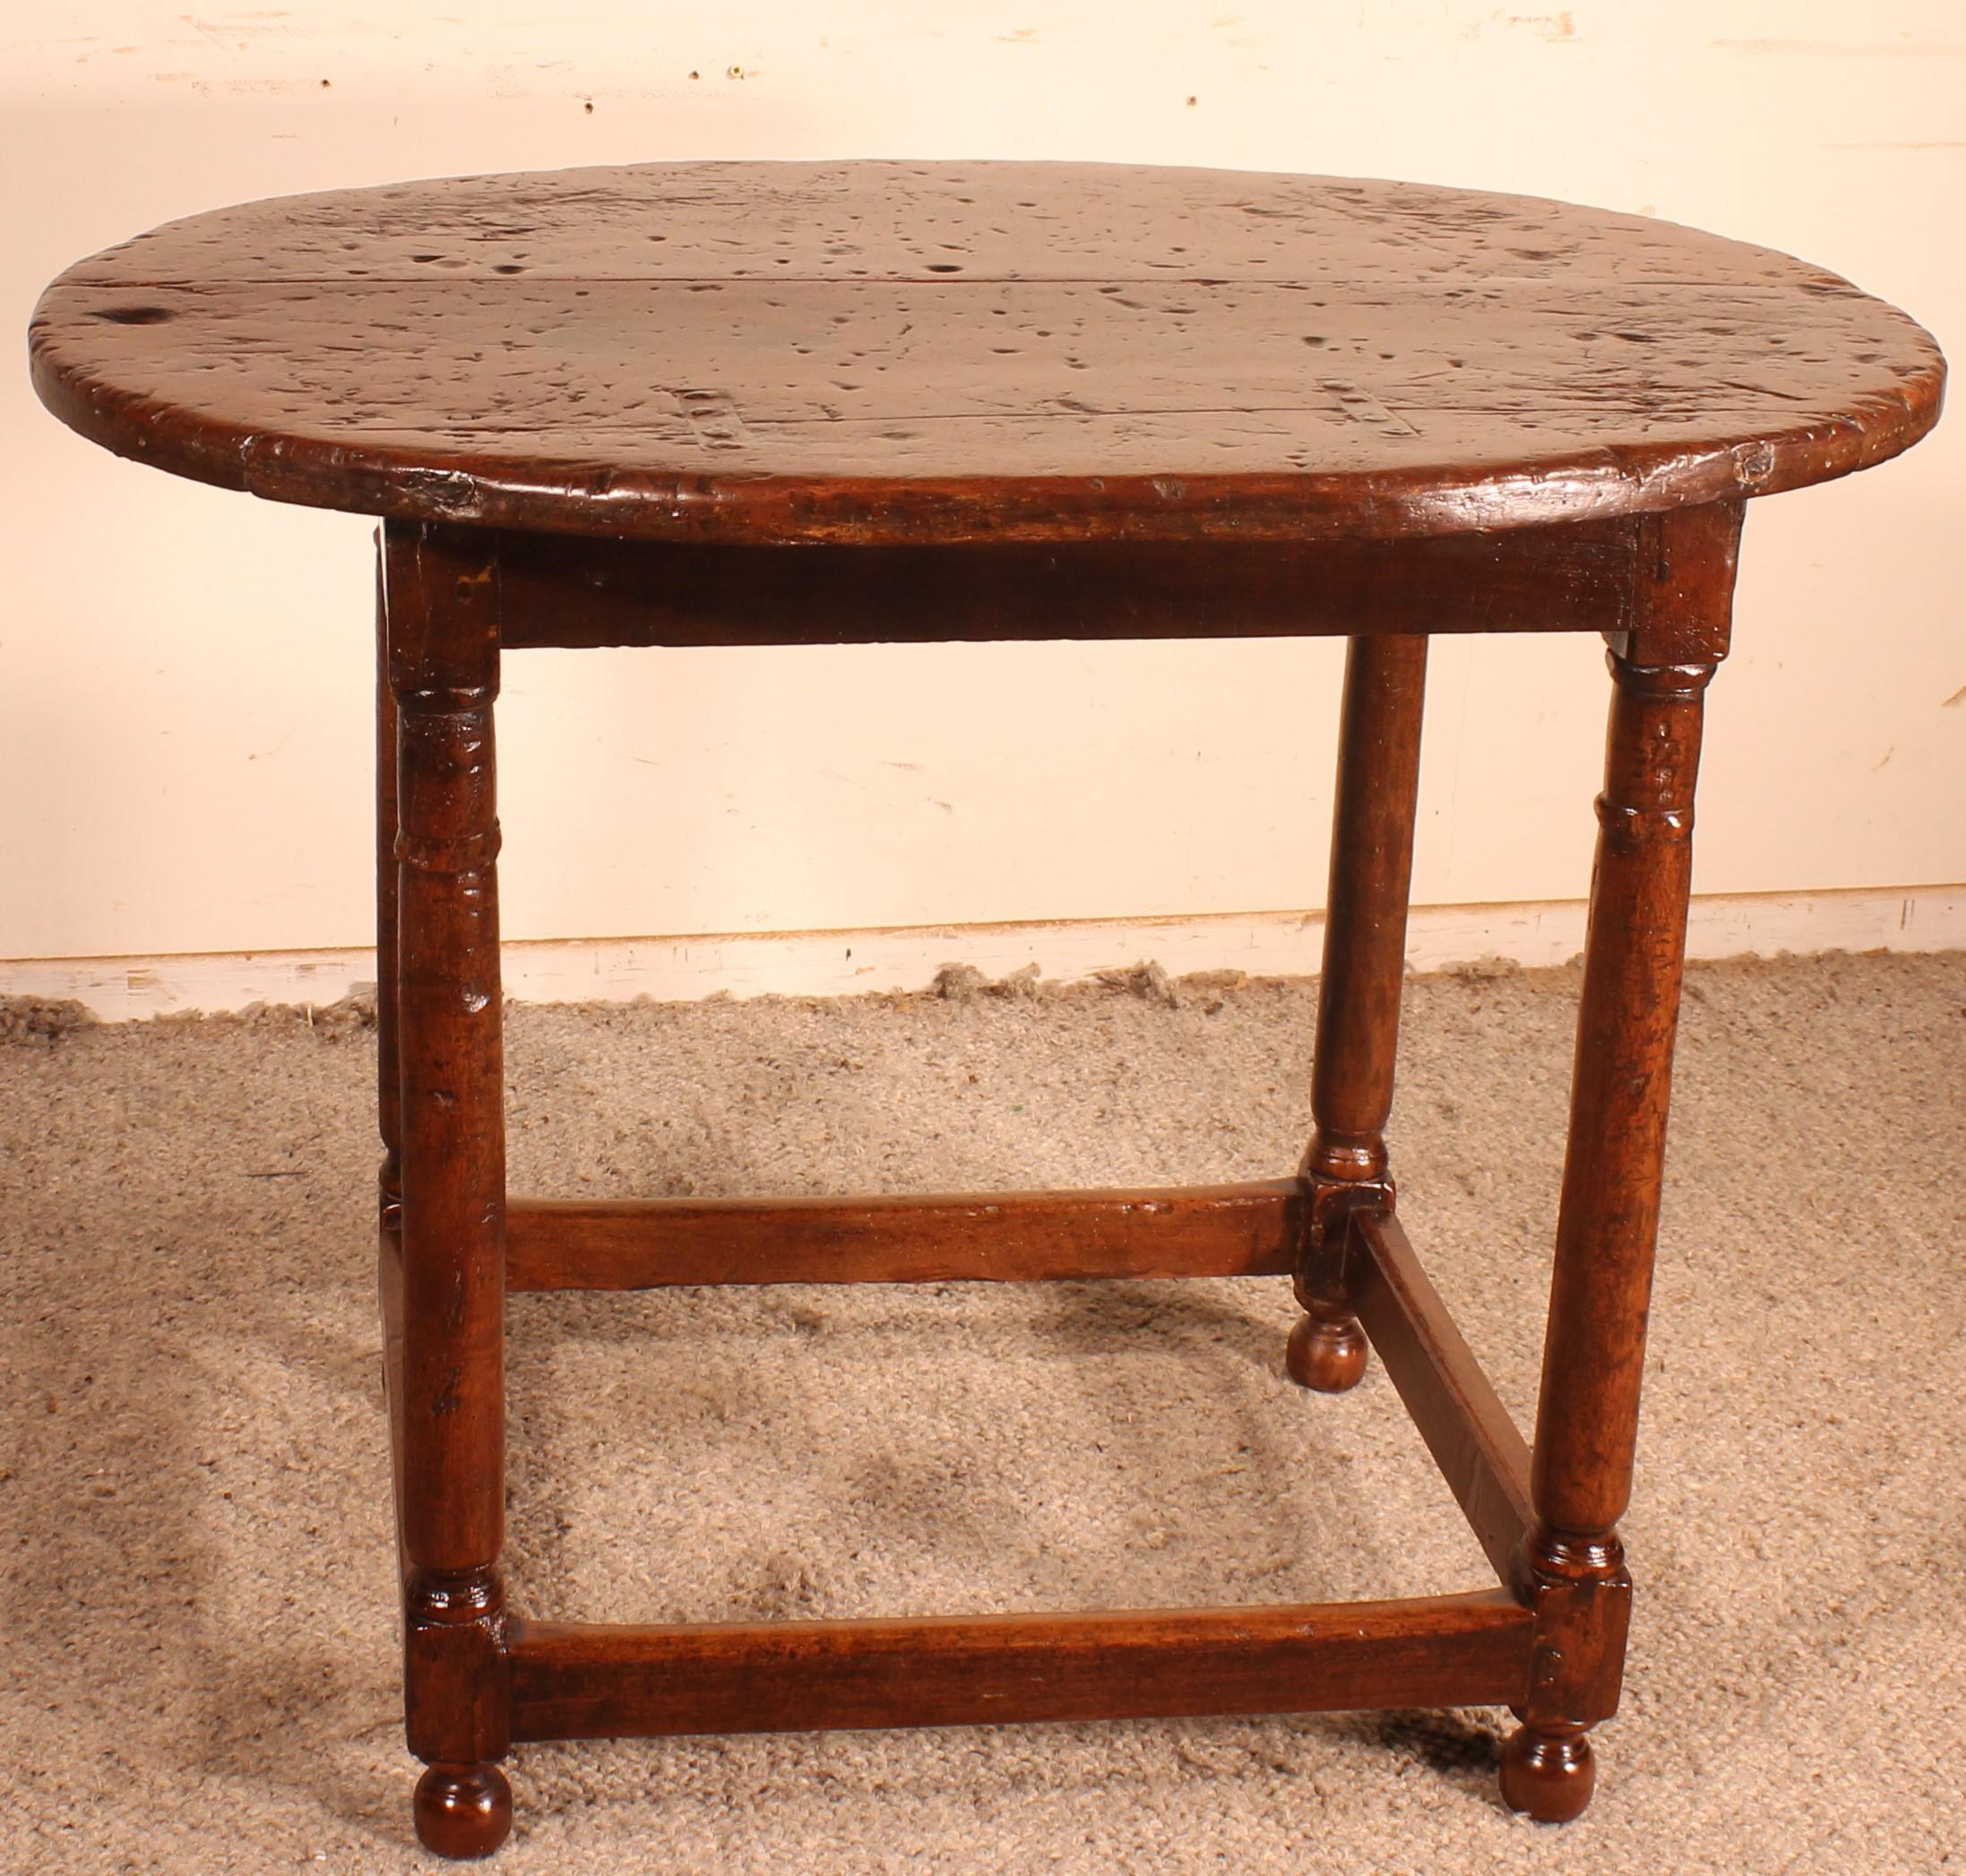 Henri II Table in Walnut, 16th Century For Sale 2